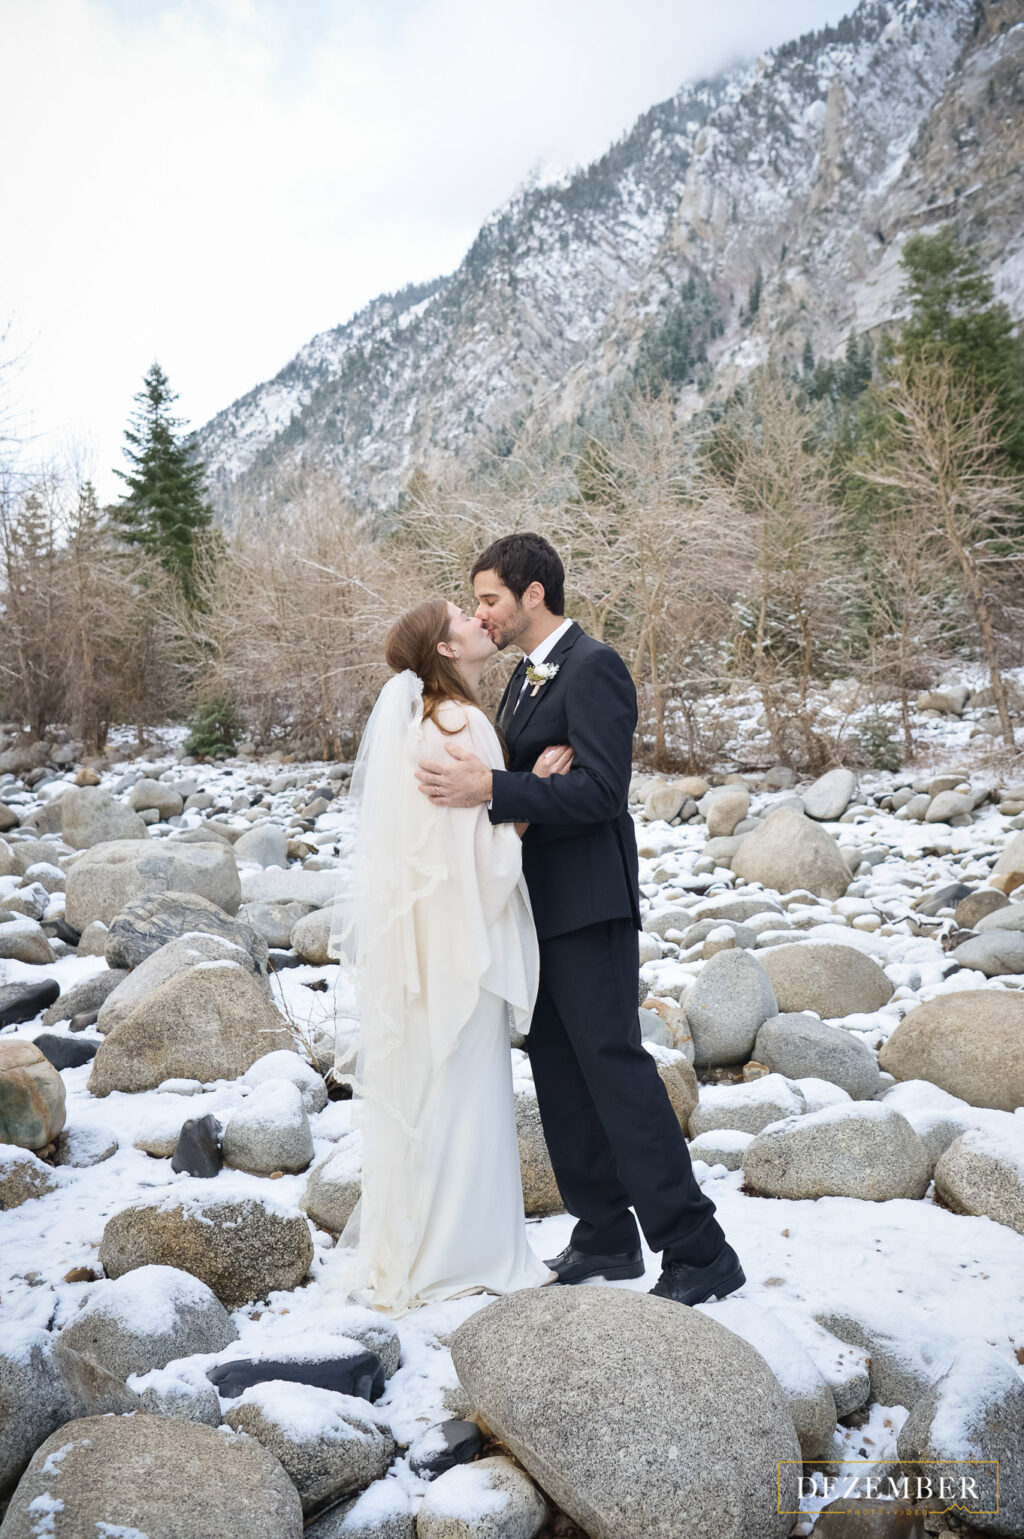 Intimate mountain wedding kiss